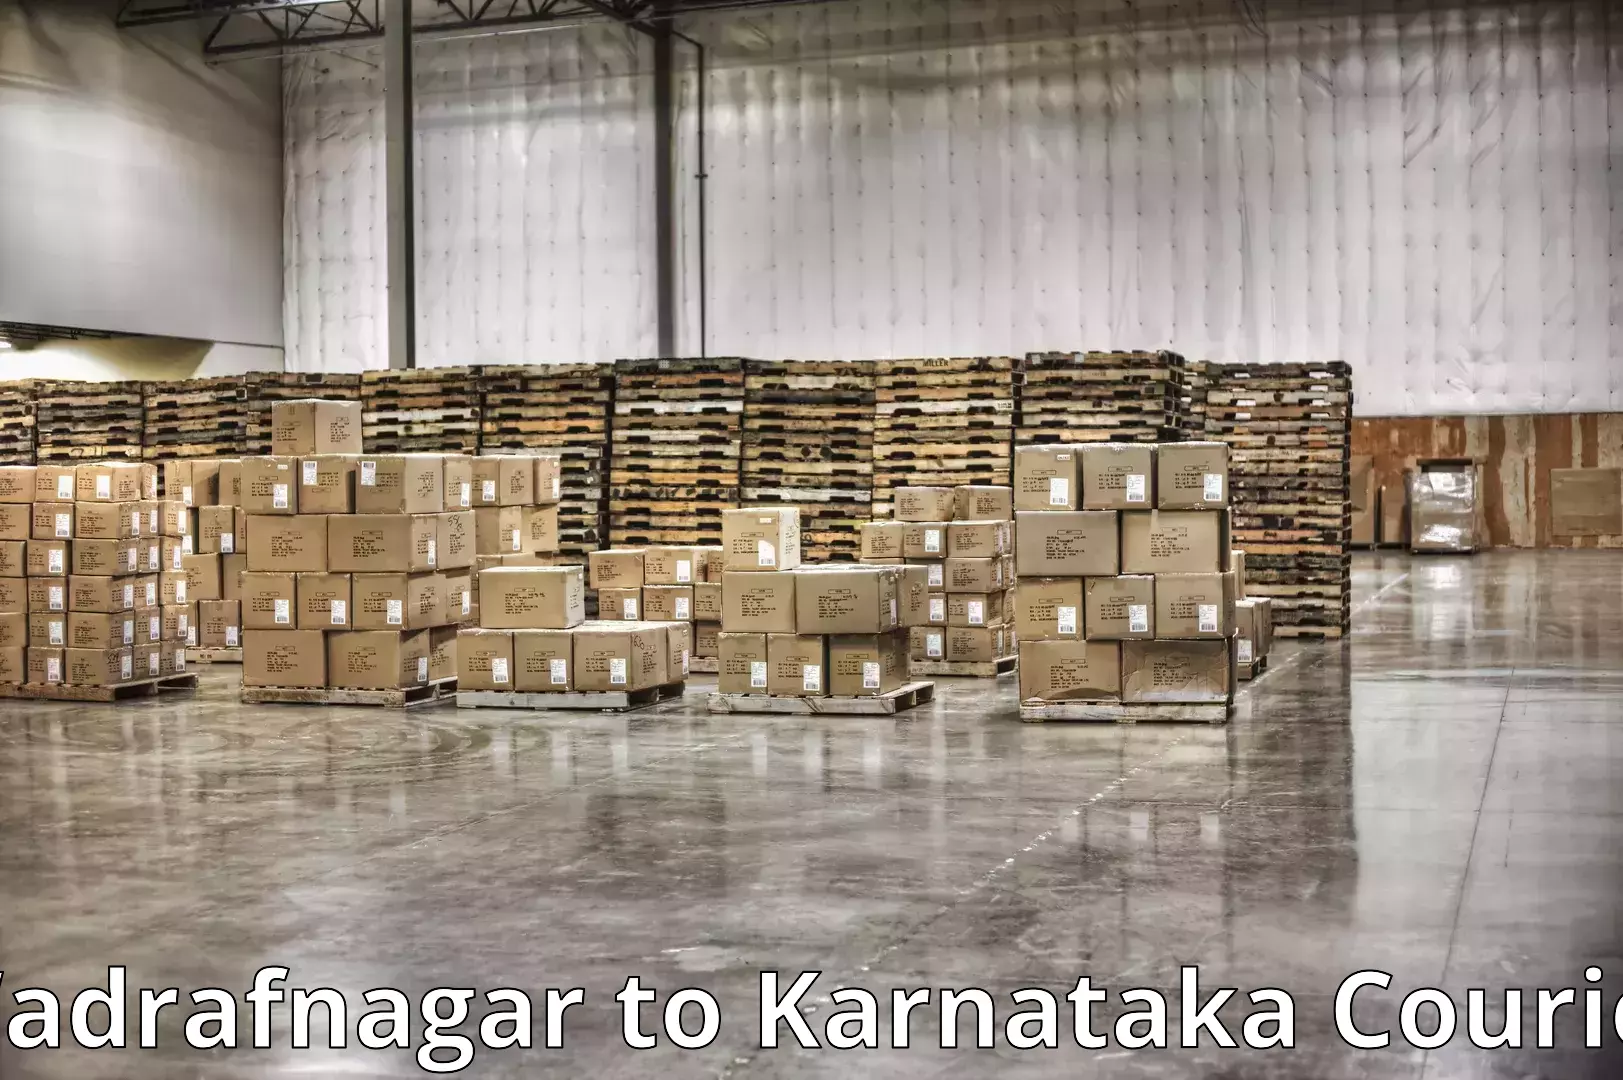 Quality moving and storage in Wadrafnagar to Karnataka